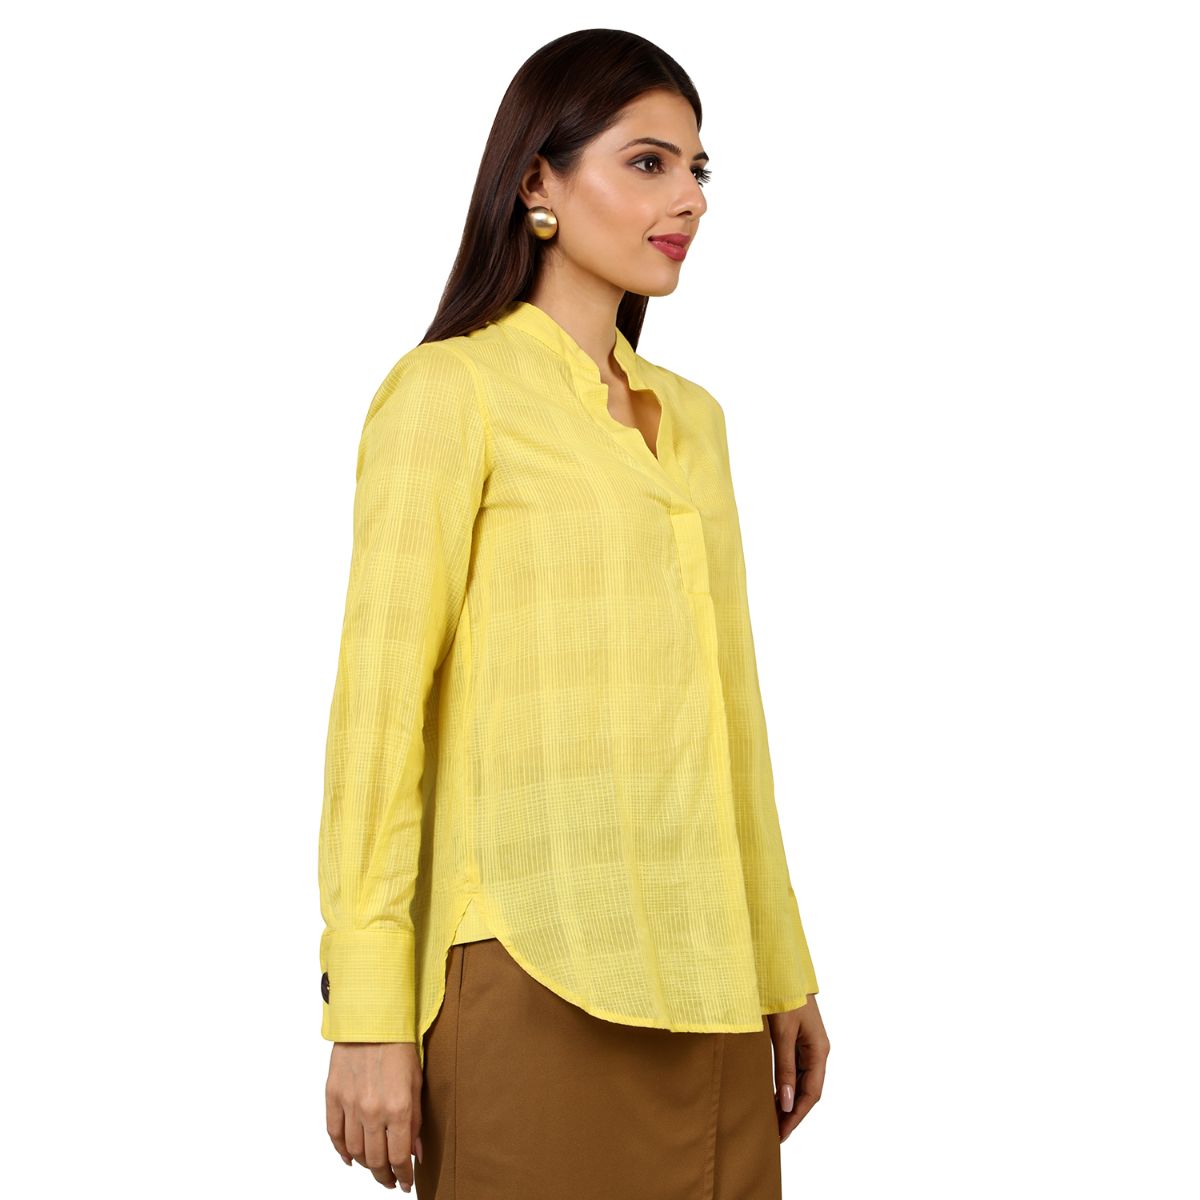 Mantra yellow cotton High low shirt